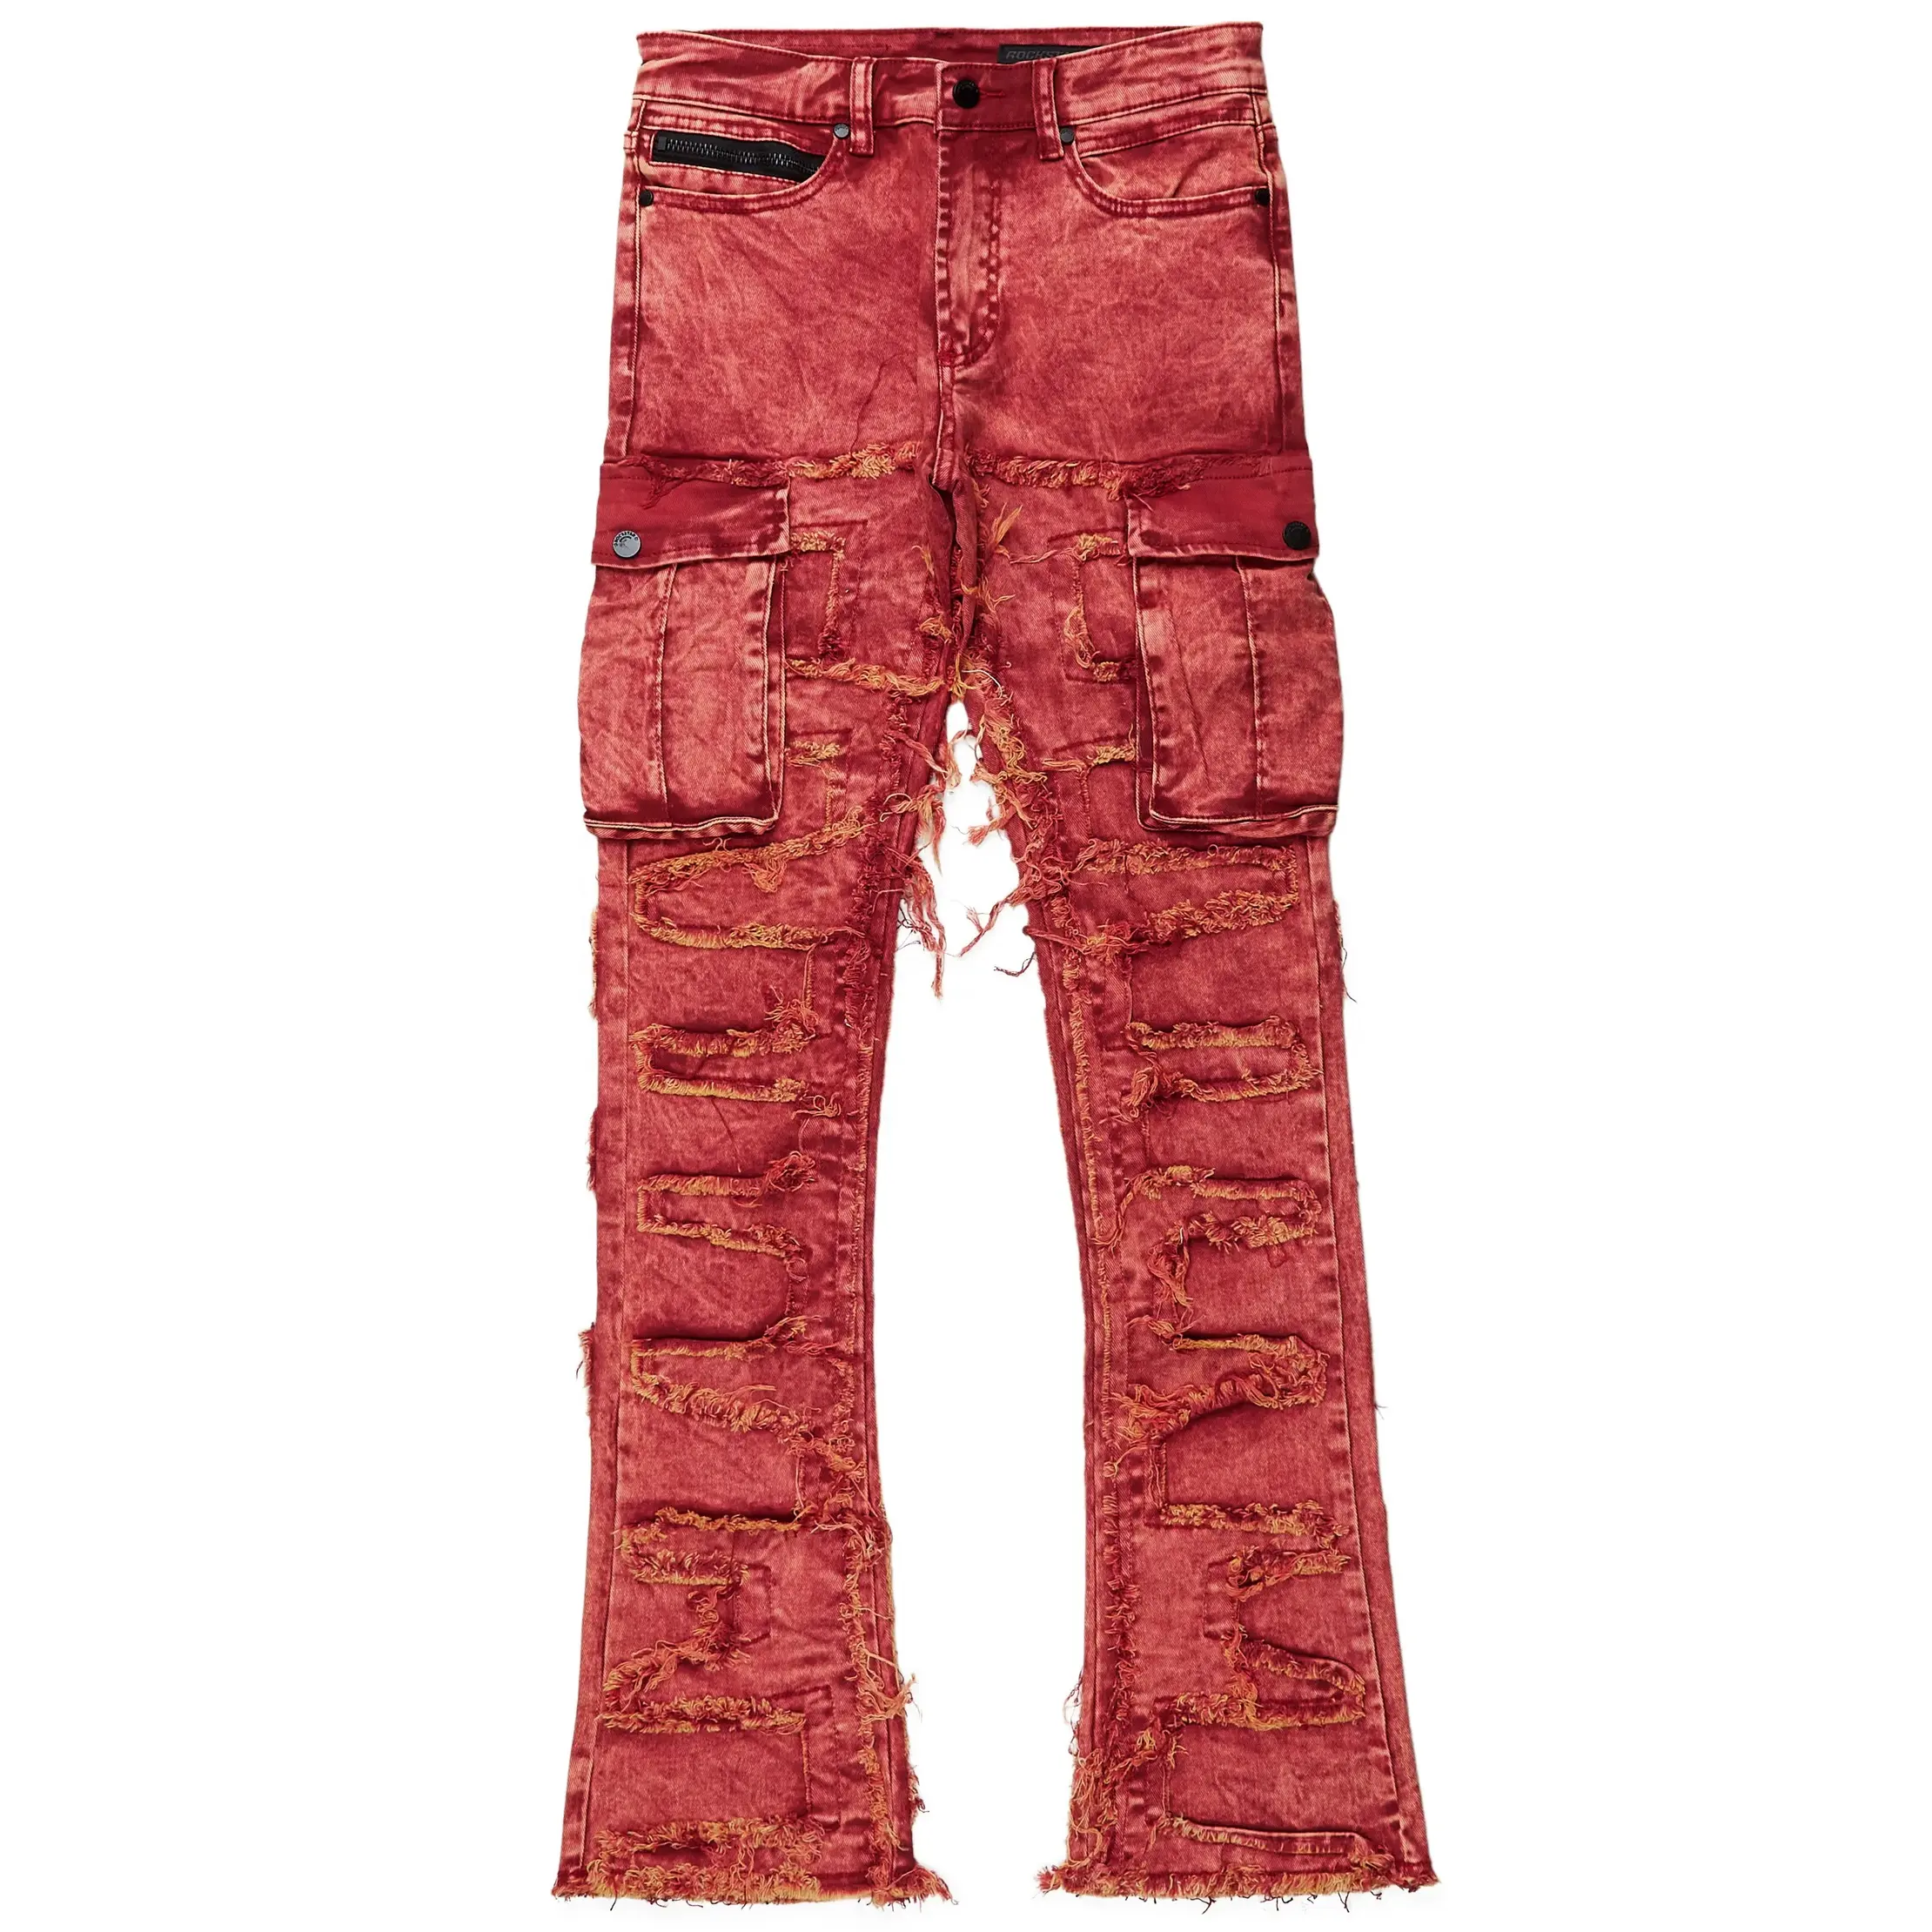 AeeDenim red denim distressed pants unisex acid washed denim cargo pants men stretch denim pants men jeans